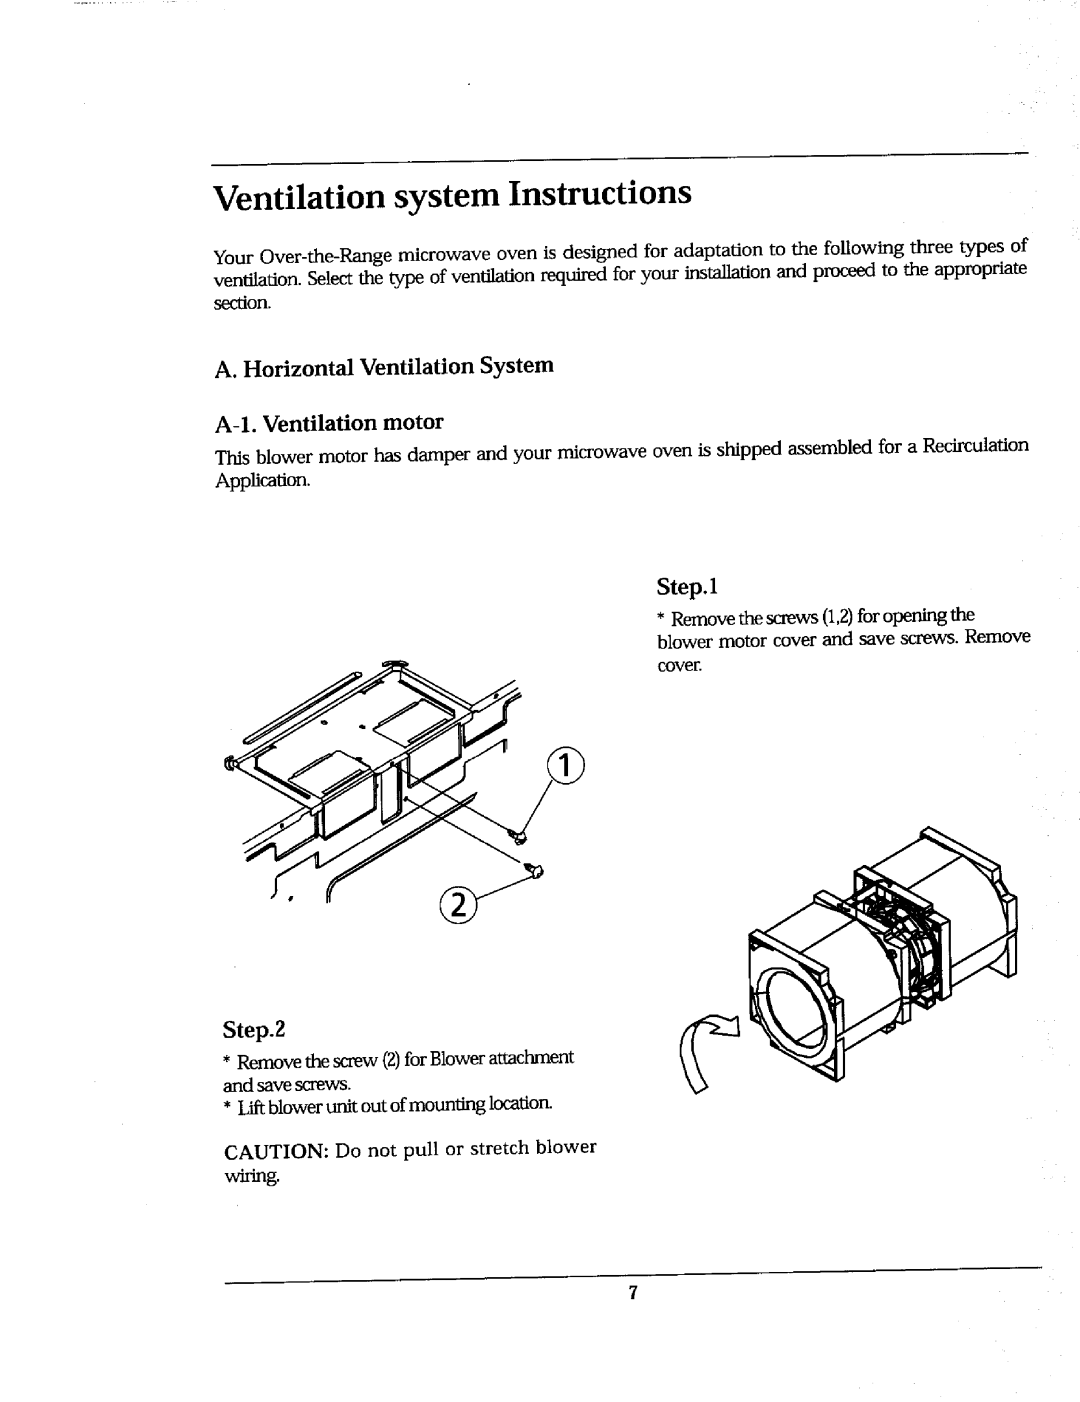 Whirlpool Ni-l30 Ventilation system Instructions, A. Horizontal Ventilation System, Step.1, Step.2C, A-1.Ventilation motor 